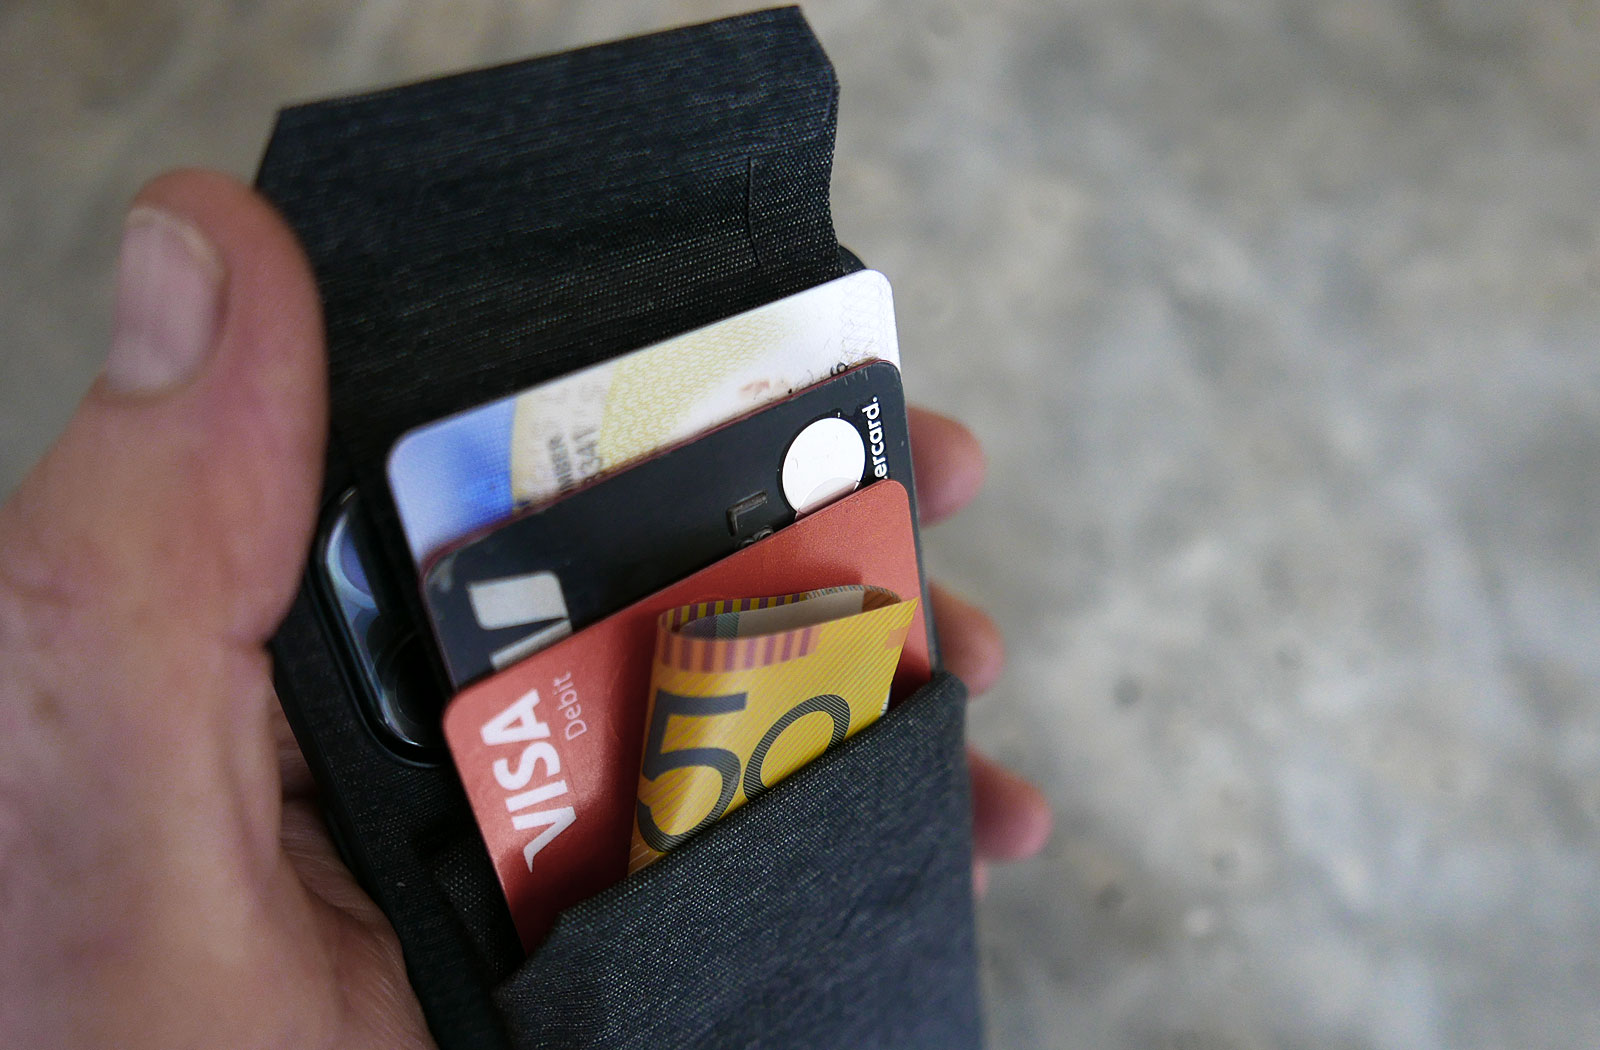 Peak Design phone case and magnetic wallet